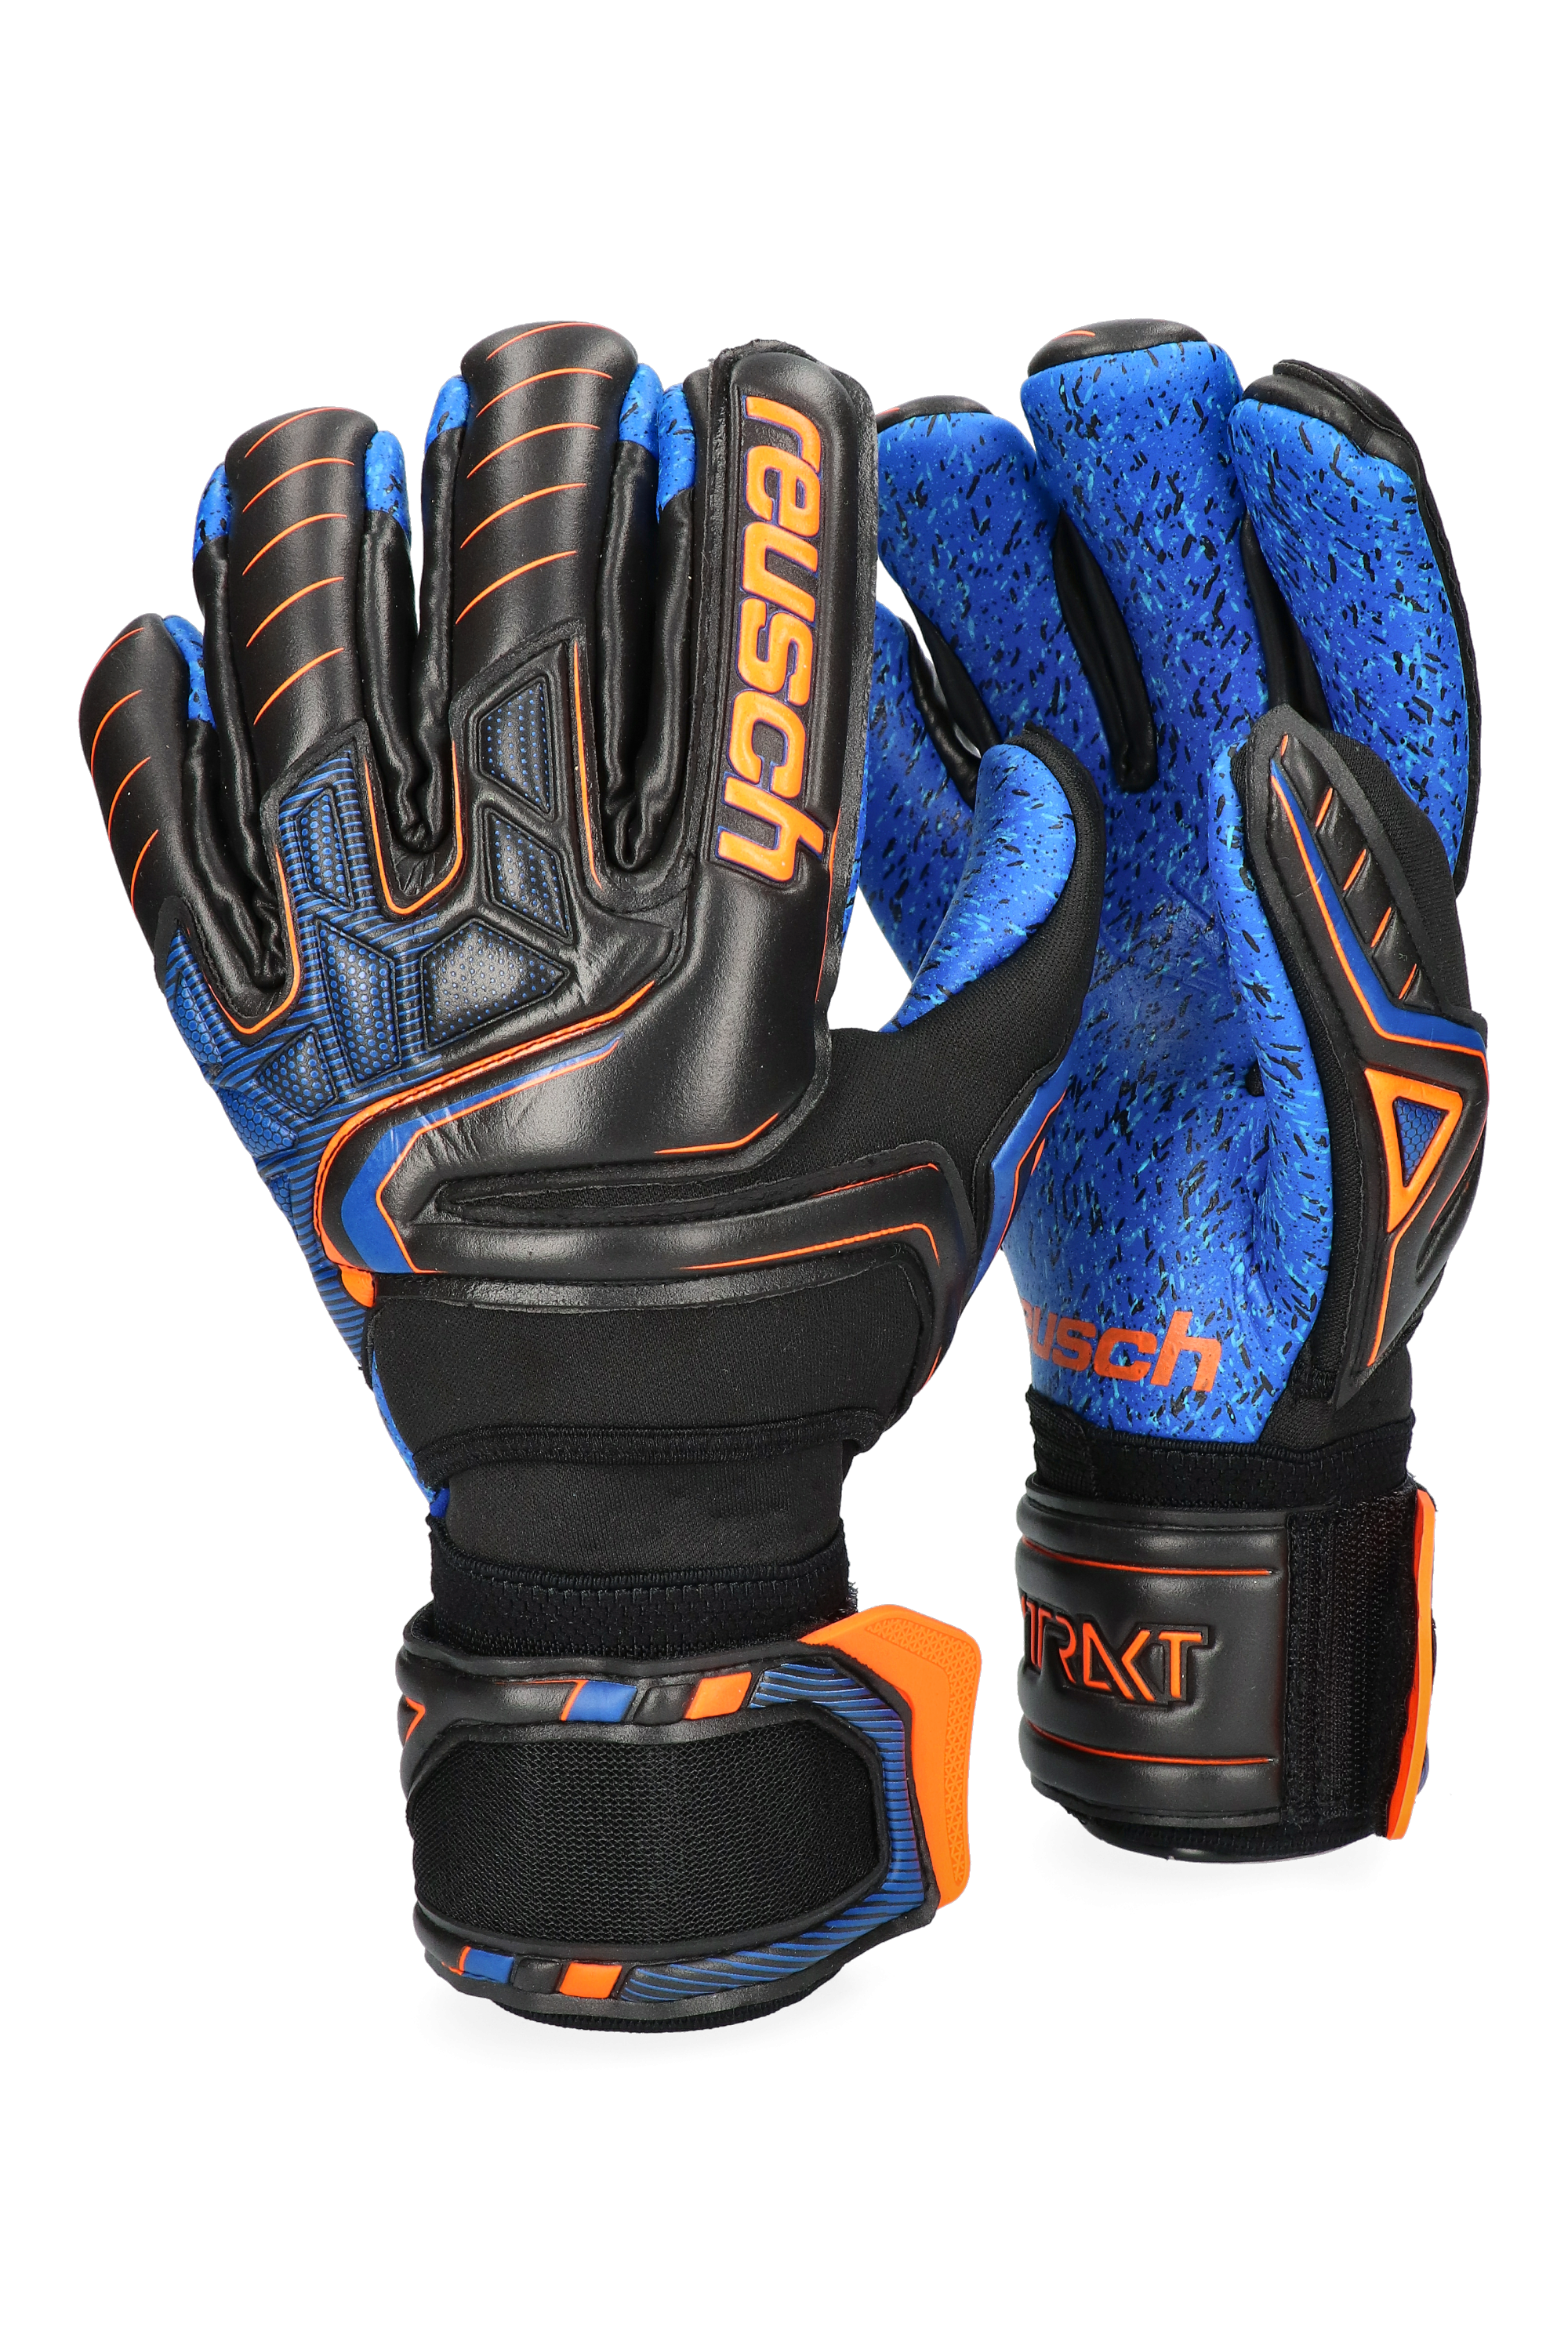 SoccerGarage Reusch Attrakt G3 Fusion Goaliator Goalkeeper Gloves NEW 5070993 